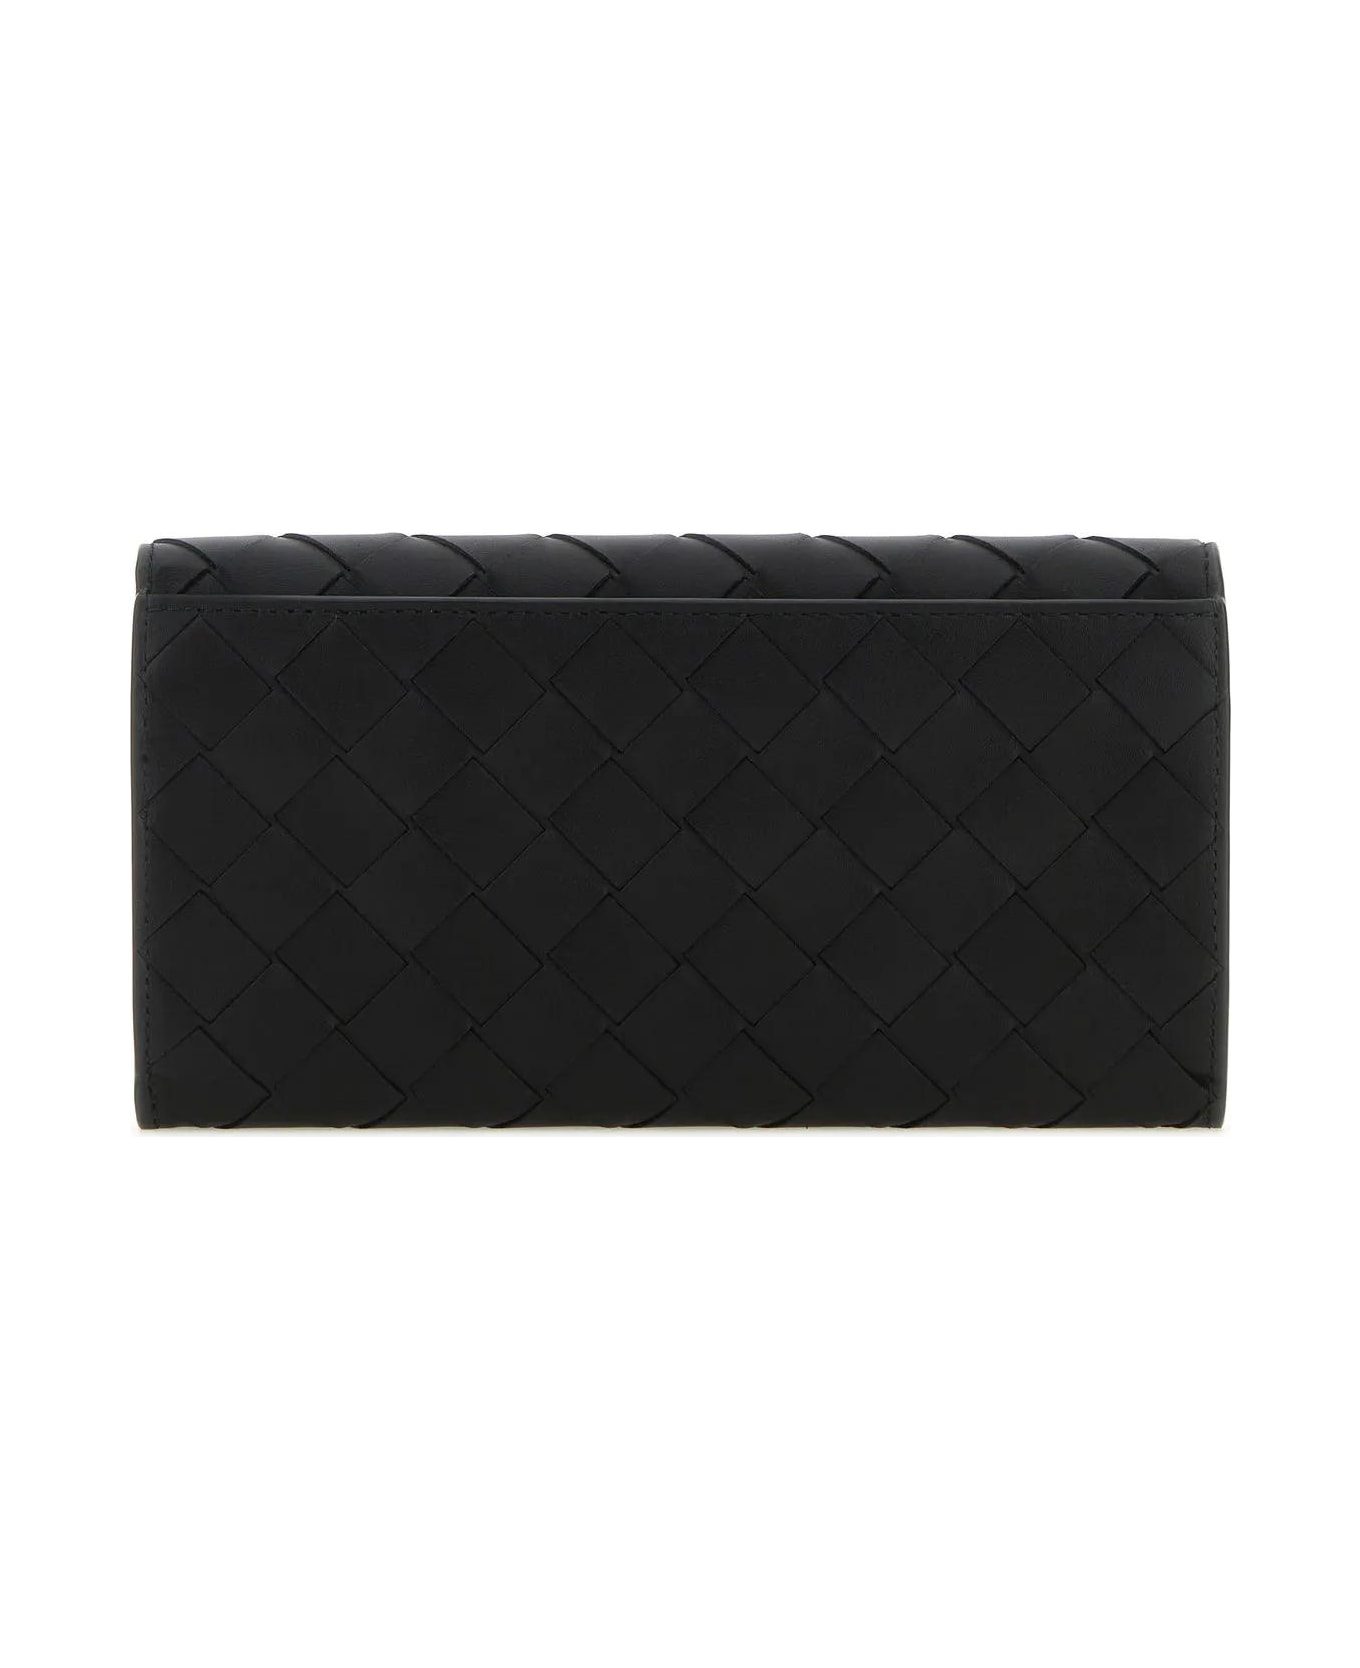 Bottega Veneta Black Leather Wallet - BLACK